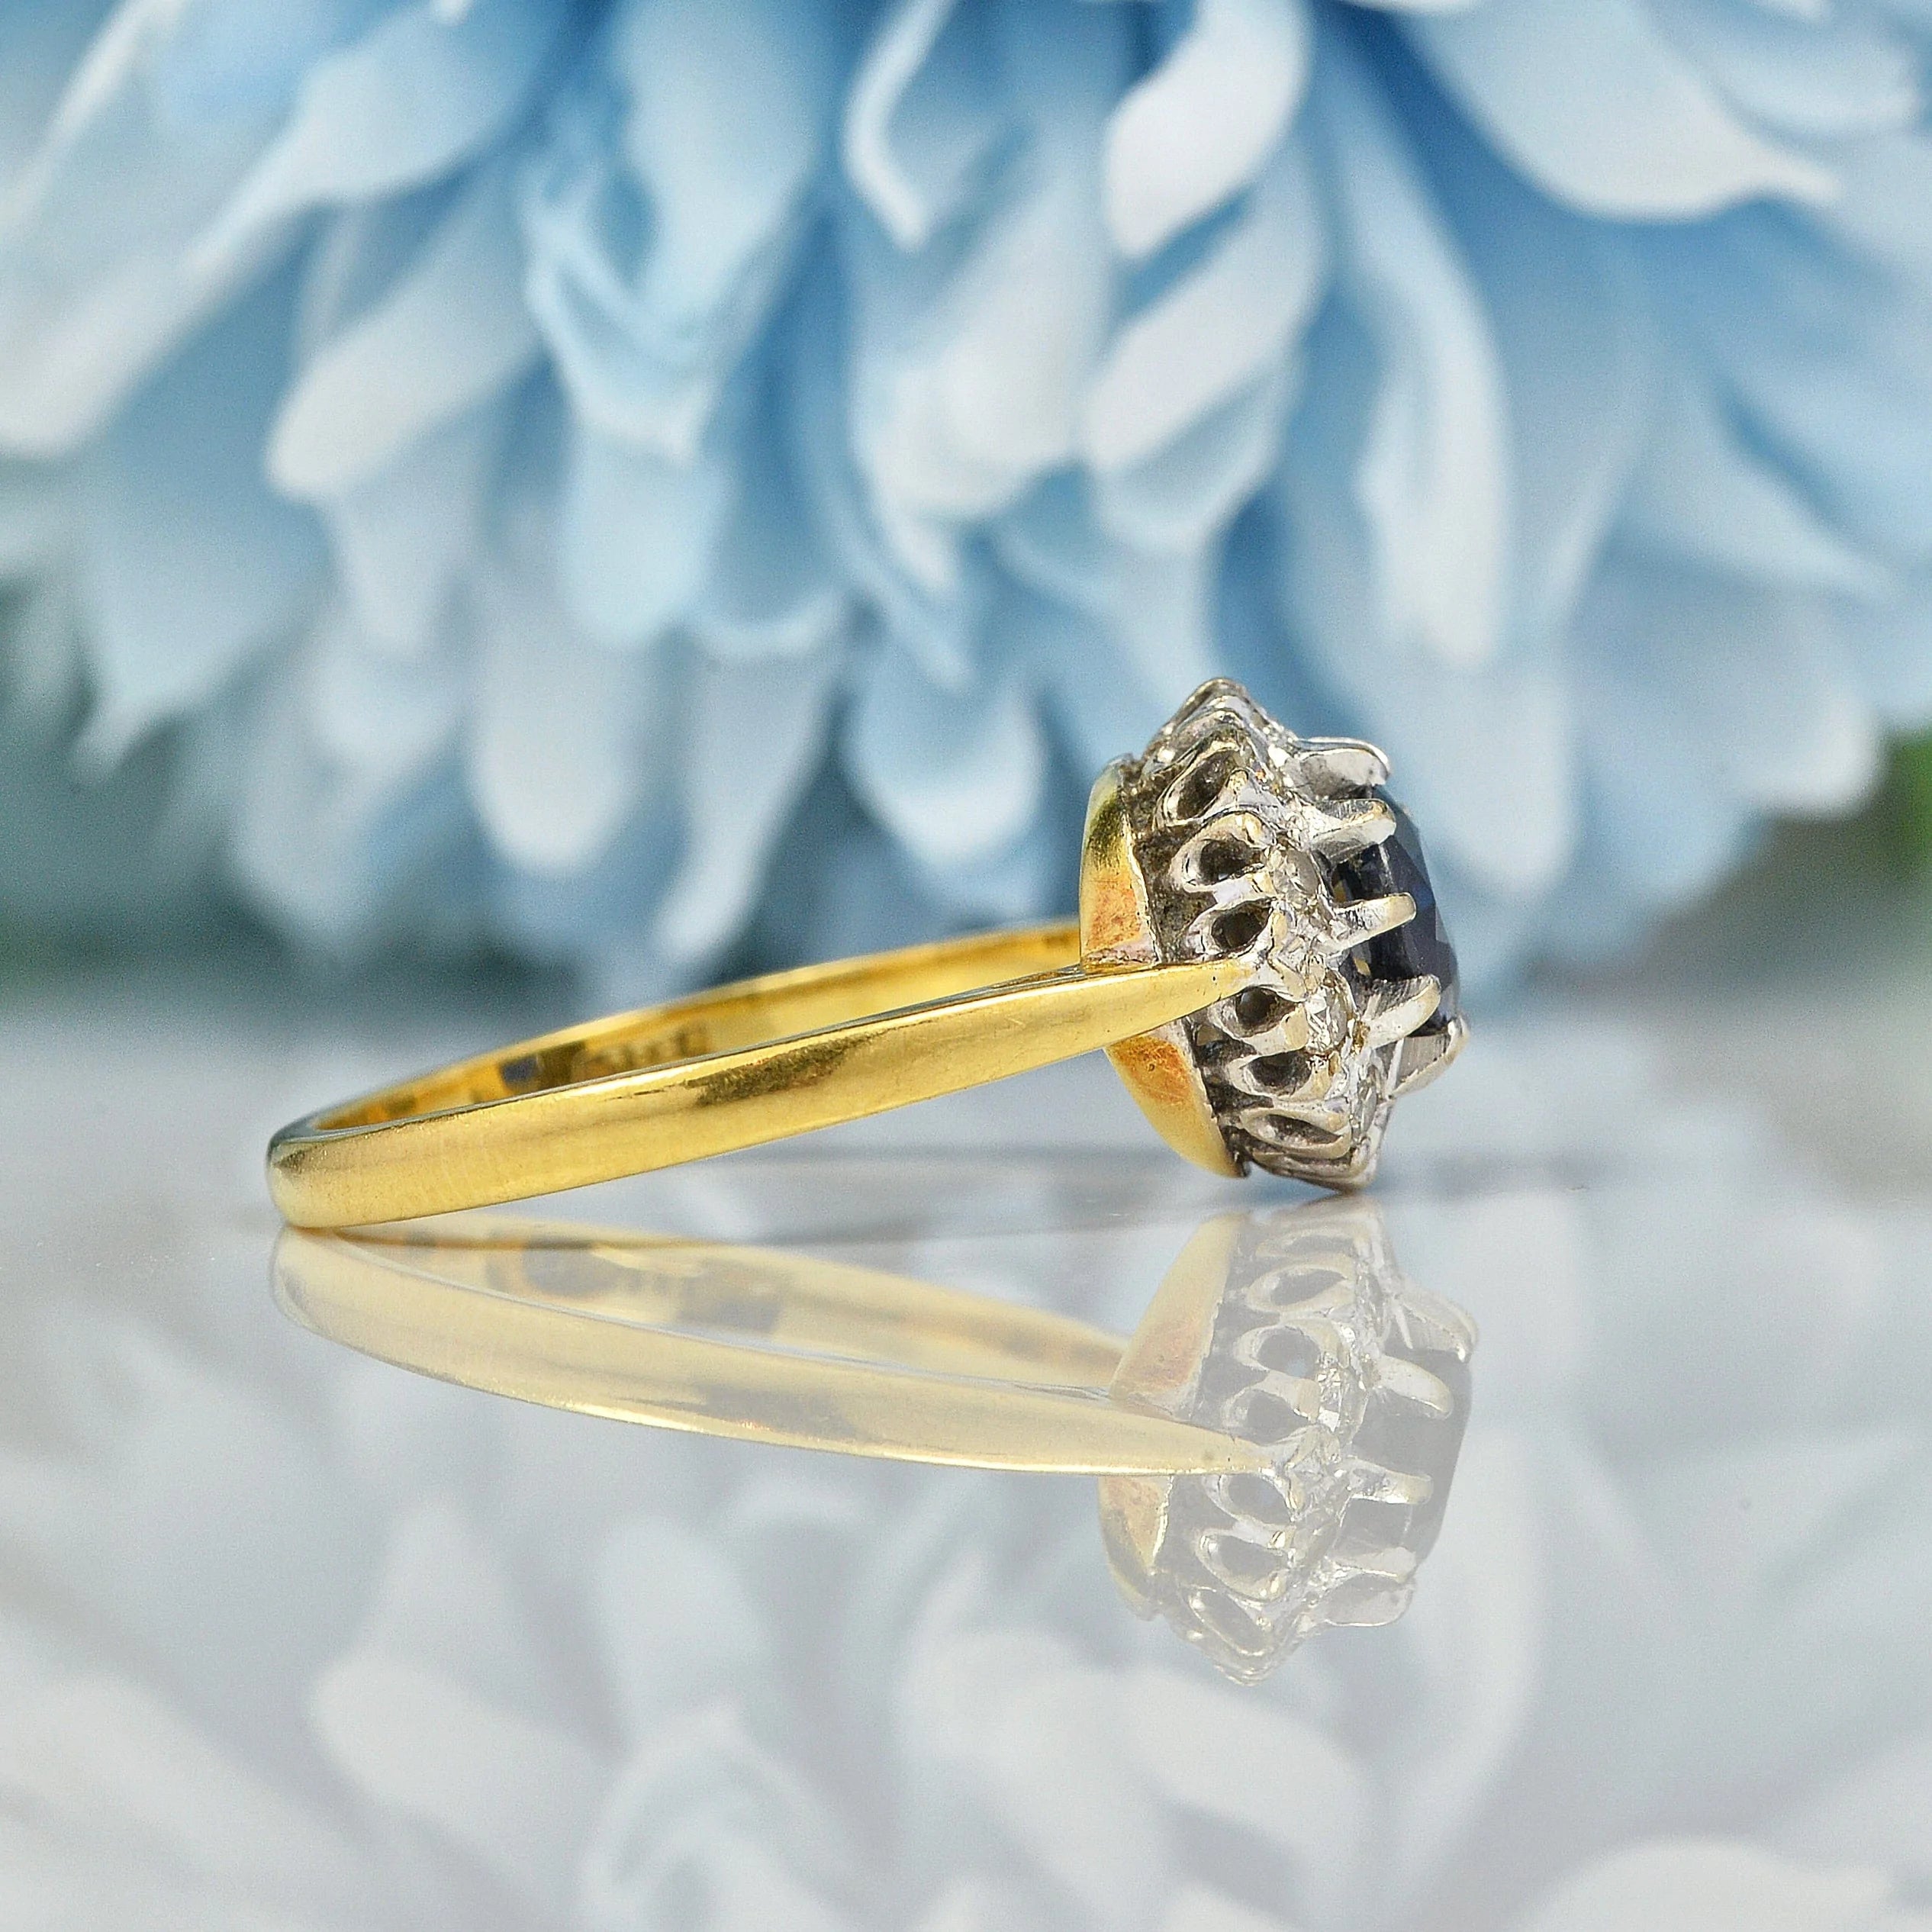 Ellibelle Jewellery Vintage 1970s Sapphire & Diamond Cluster Ring